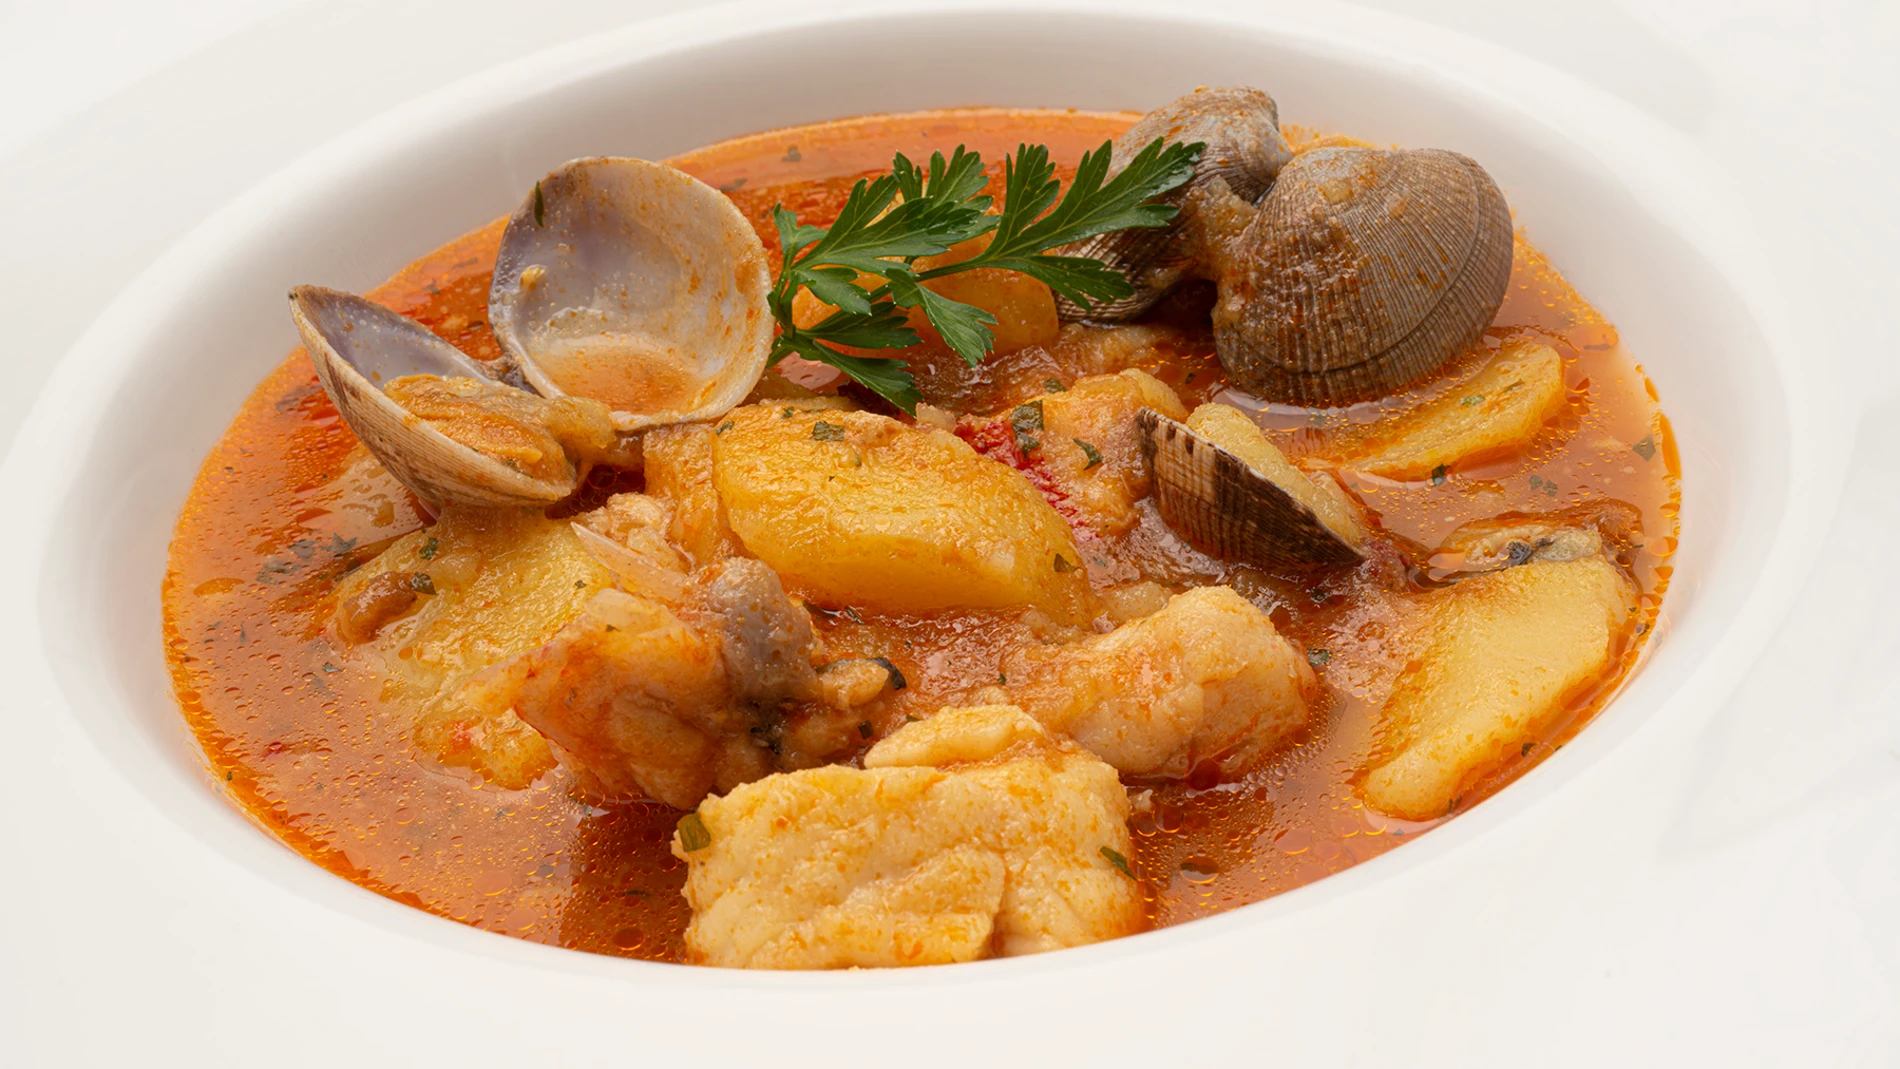 Receta de suquet de peix, de Karlos Arguiñano: "Un guiso de pescado importante"